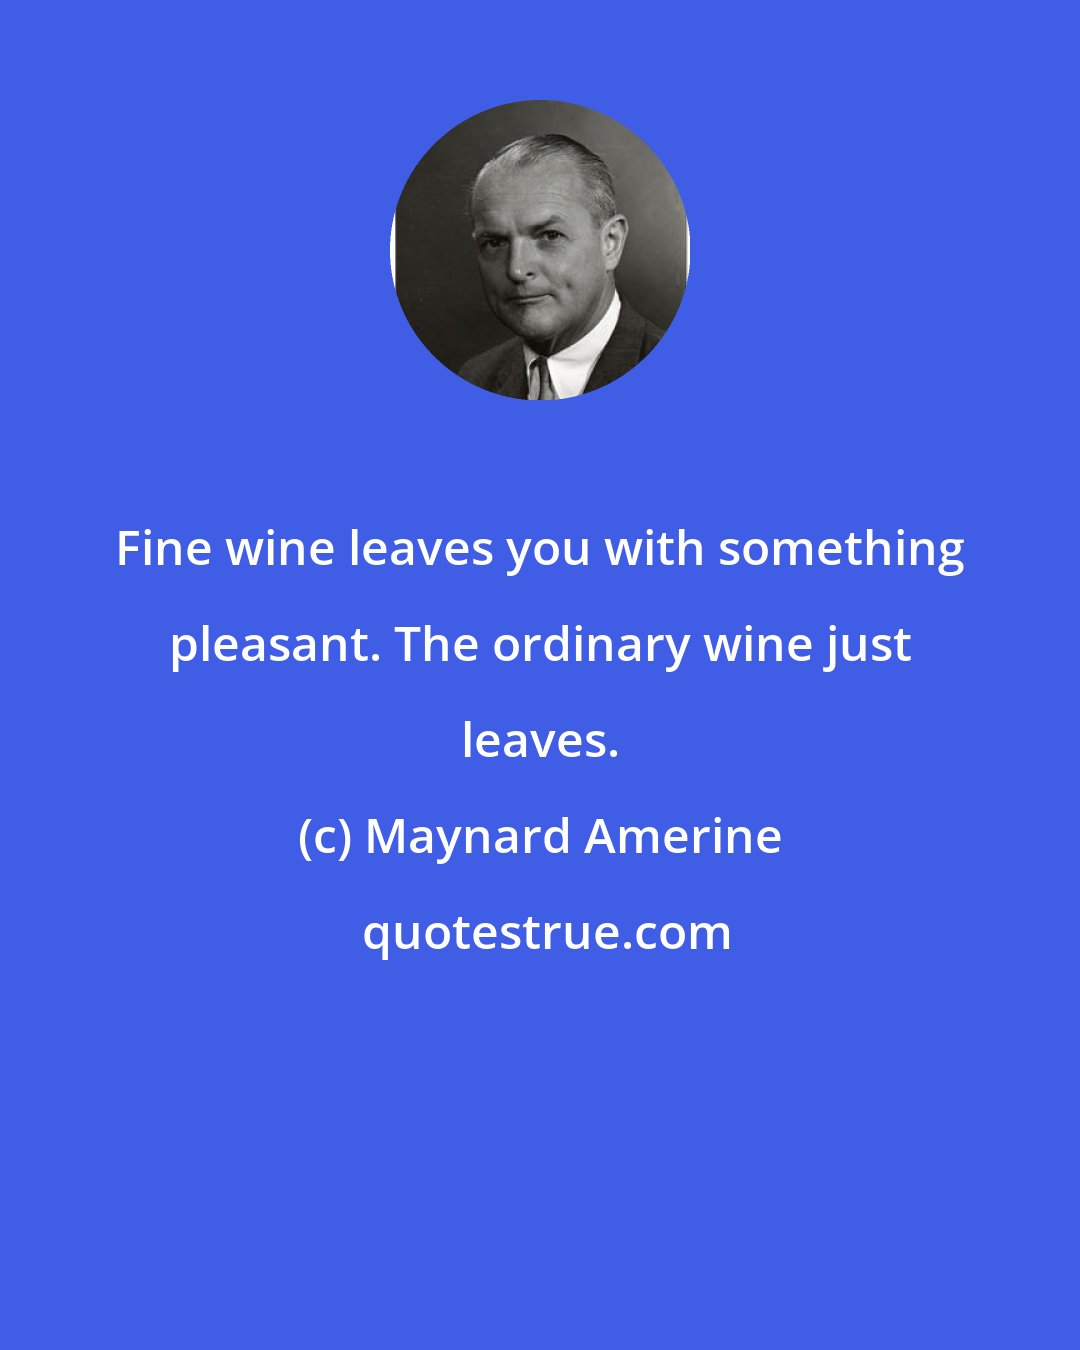 Maynard Amerine: Fine wine leaves you with something pleasant. The ordinary wine just leaves.